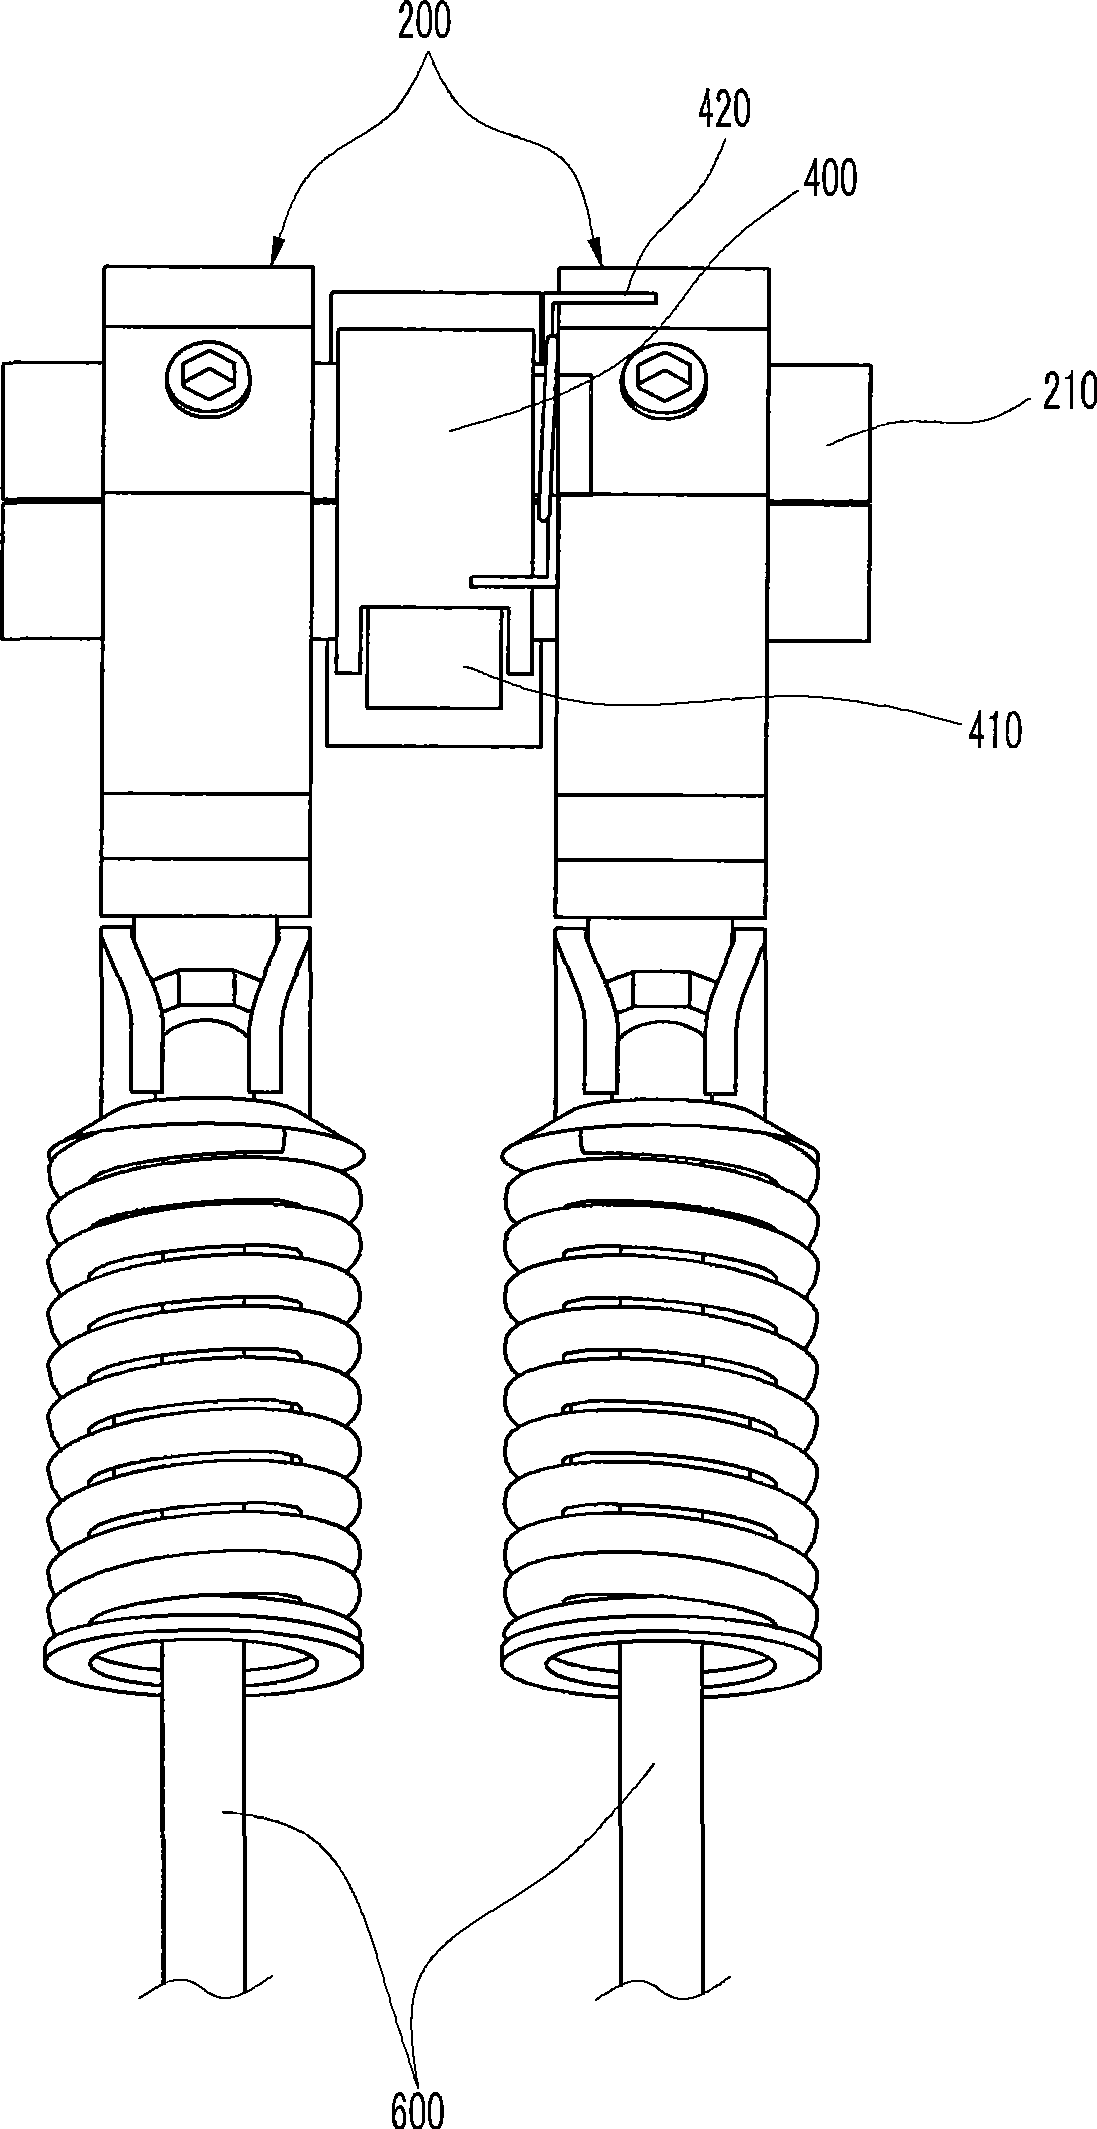 Continuous variable valve lift apparatus